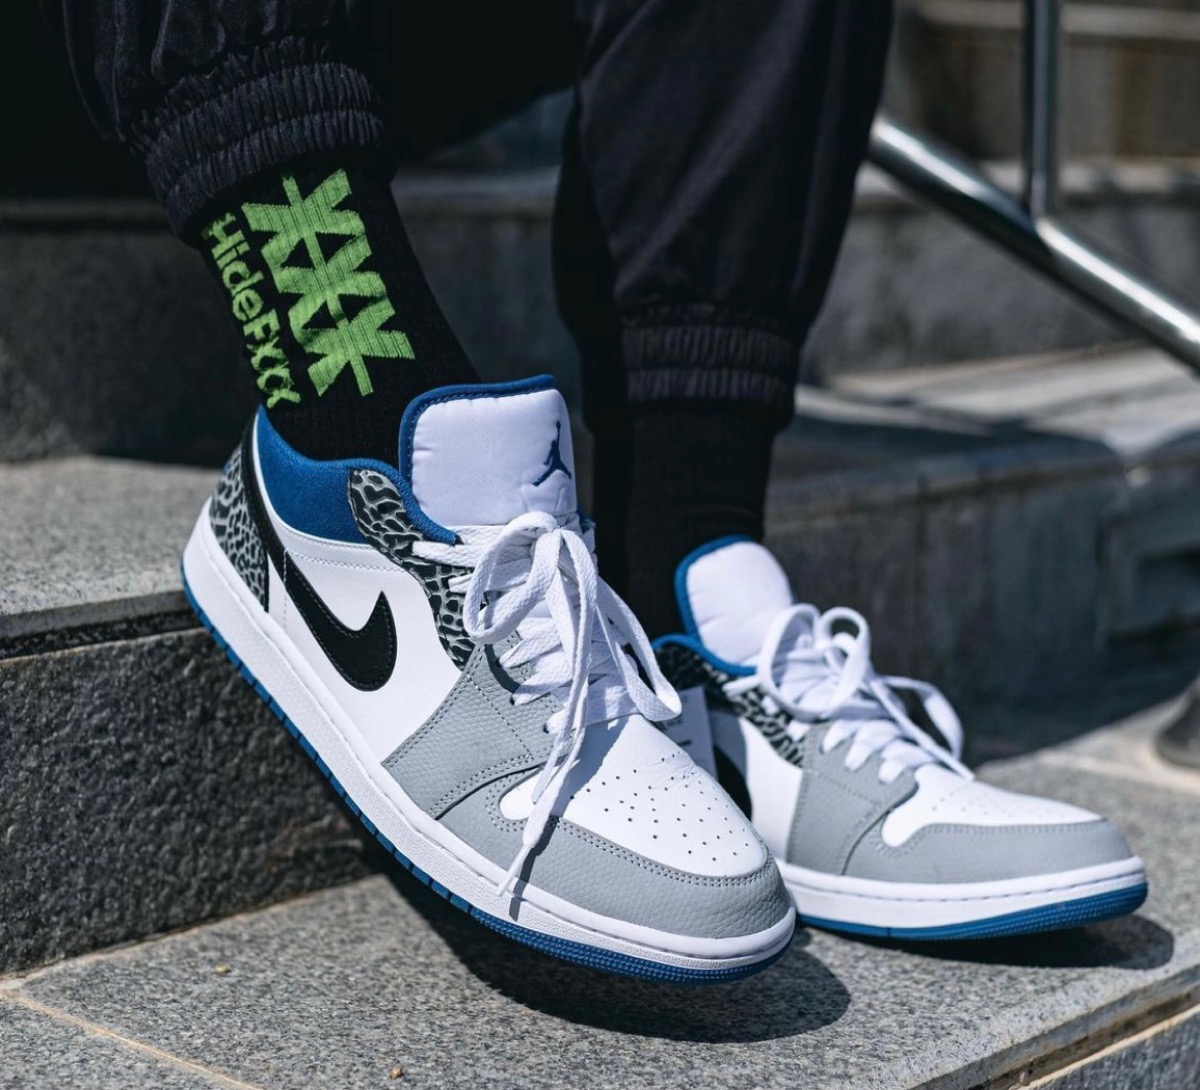 Nike Air Jordan 1 Low SE “True Blue”が国内4月8日/4月22日に発売予定 